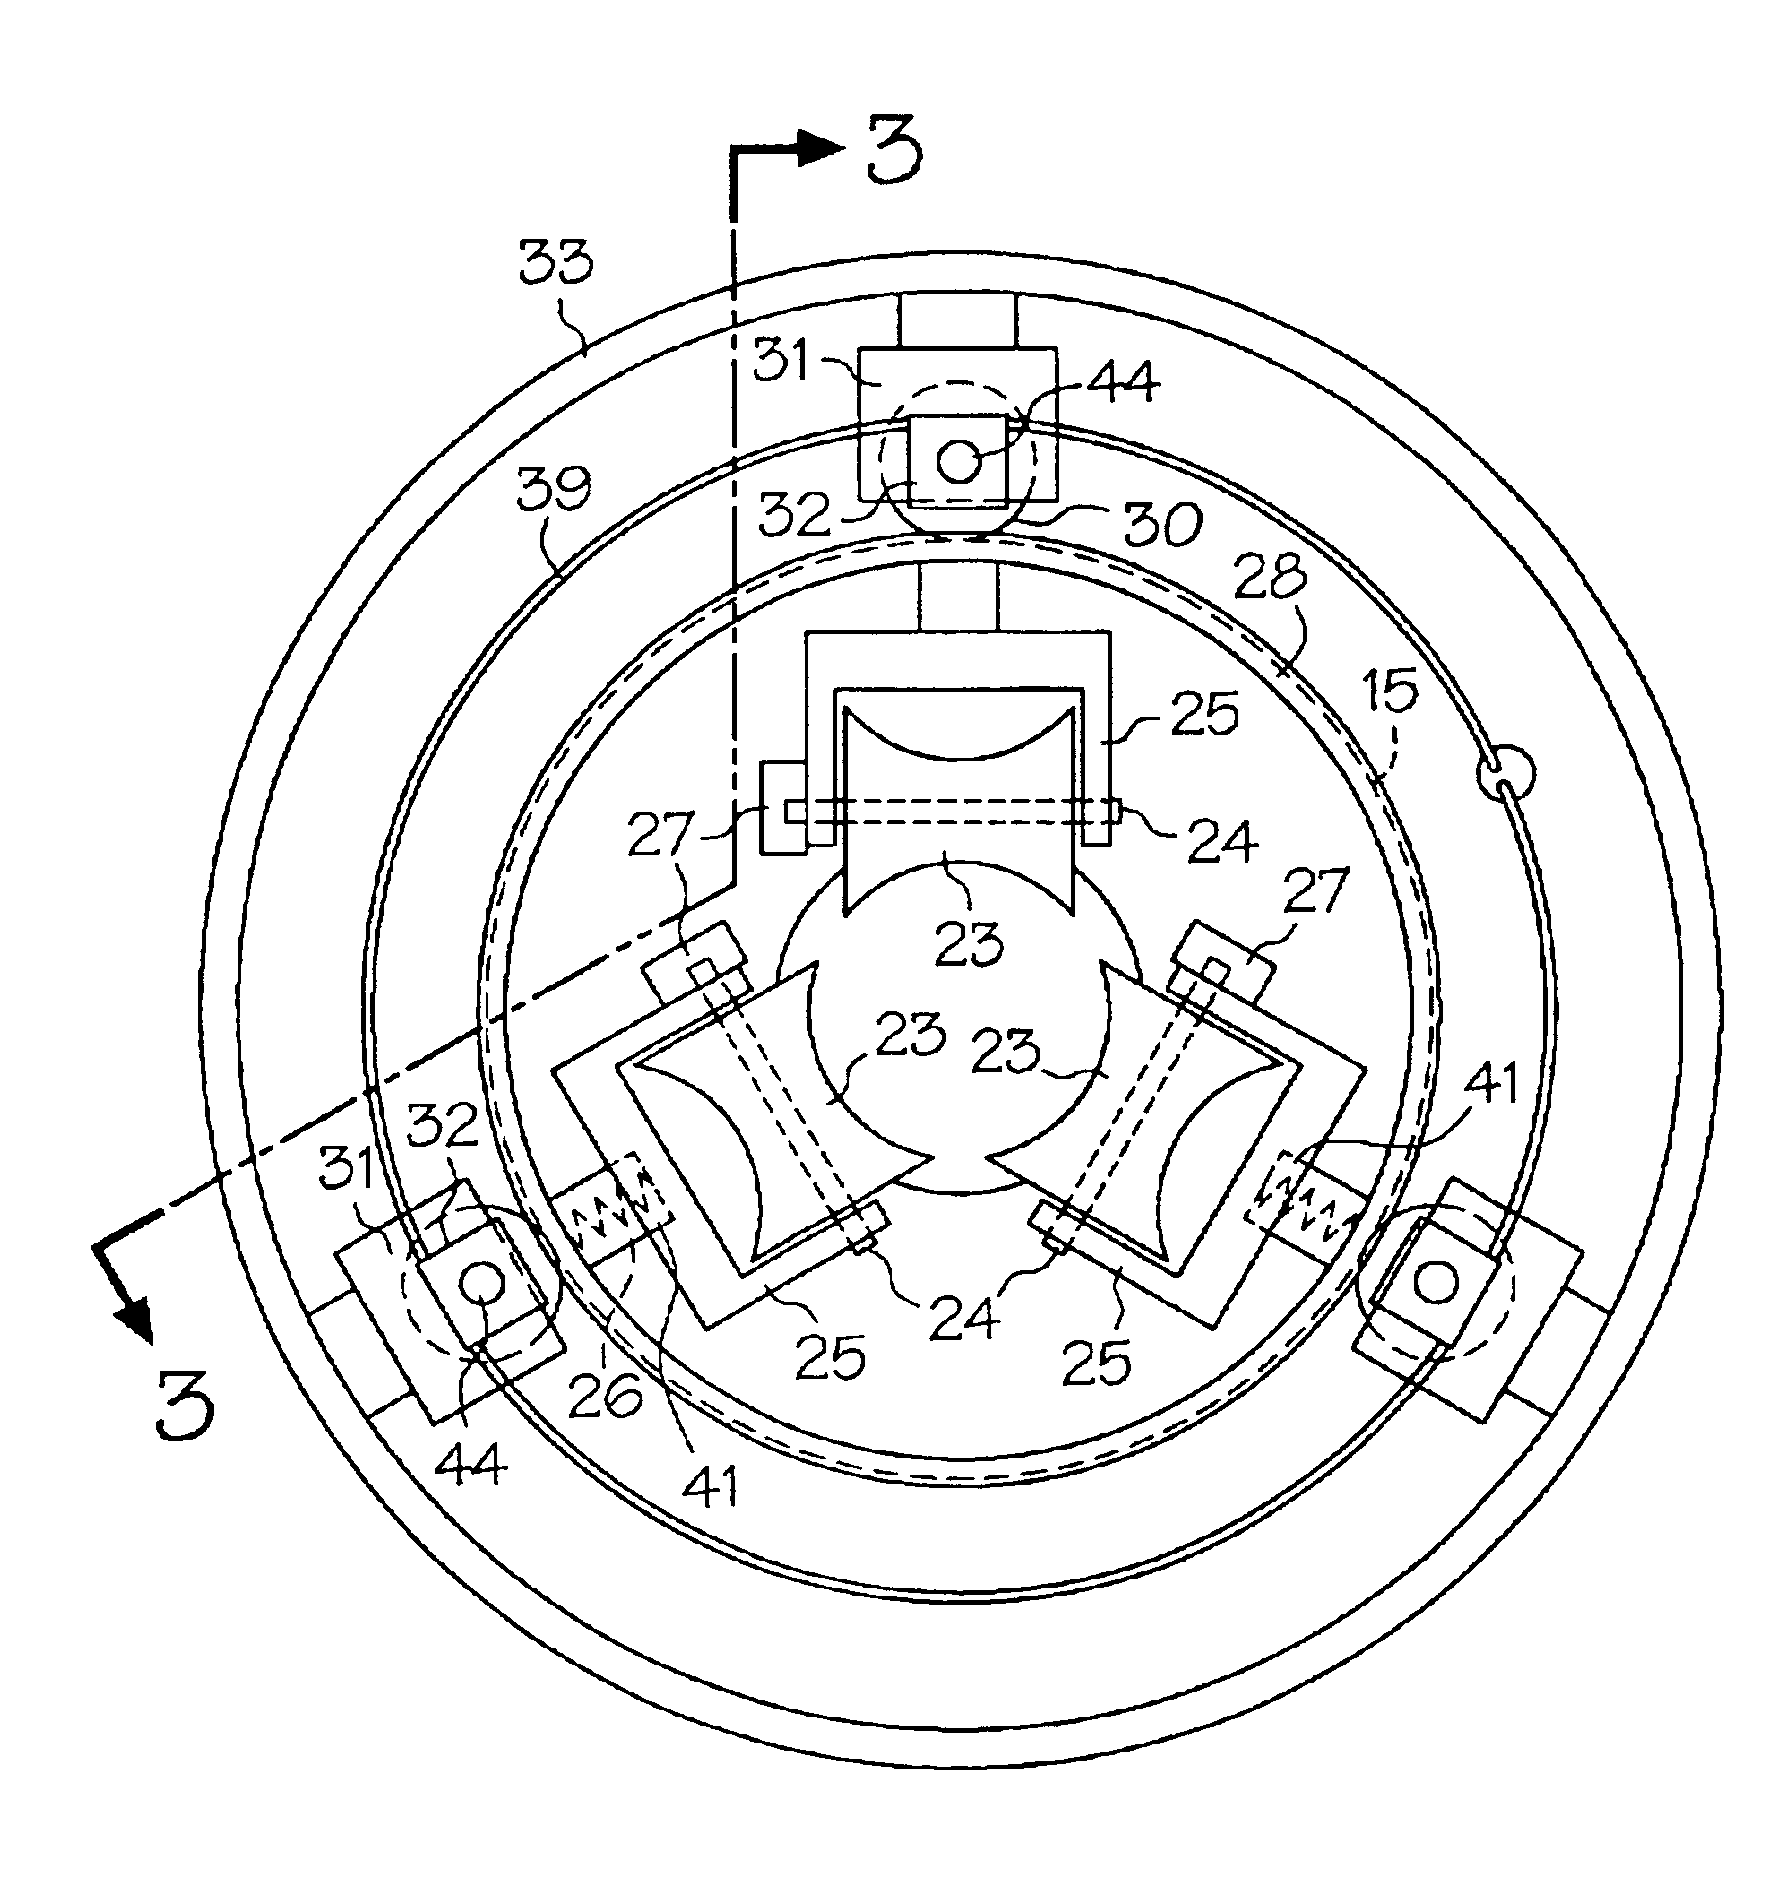 Colonoscope apparatus and method